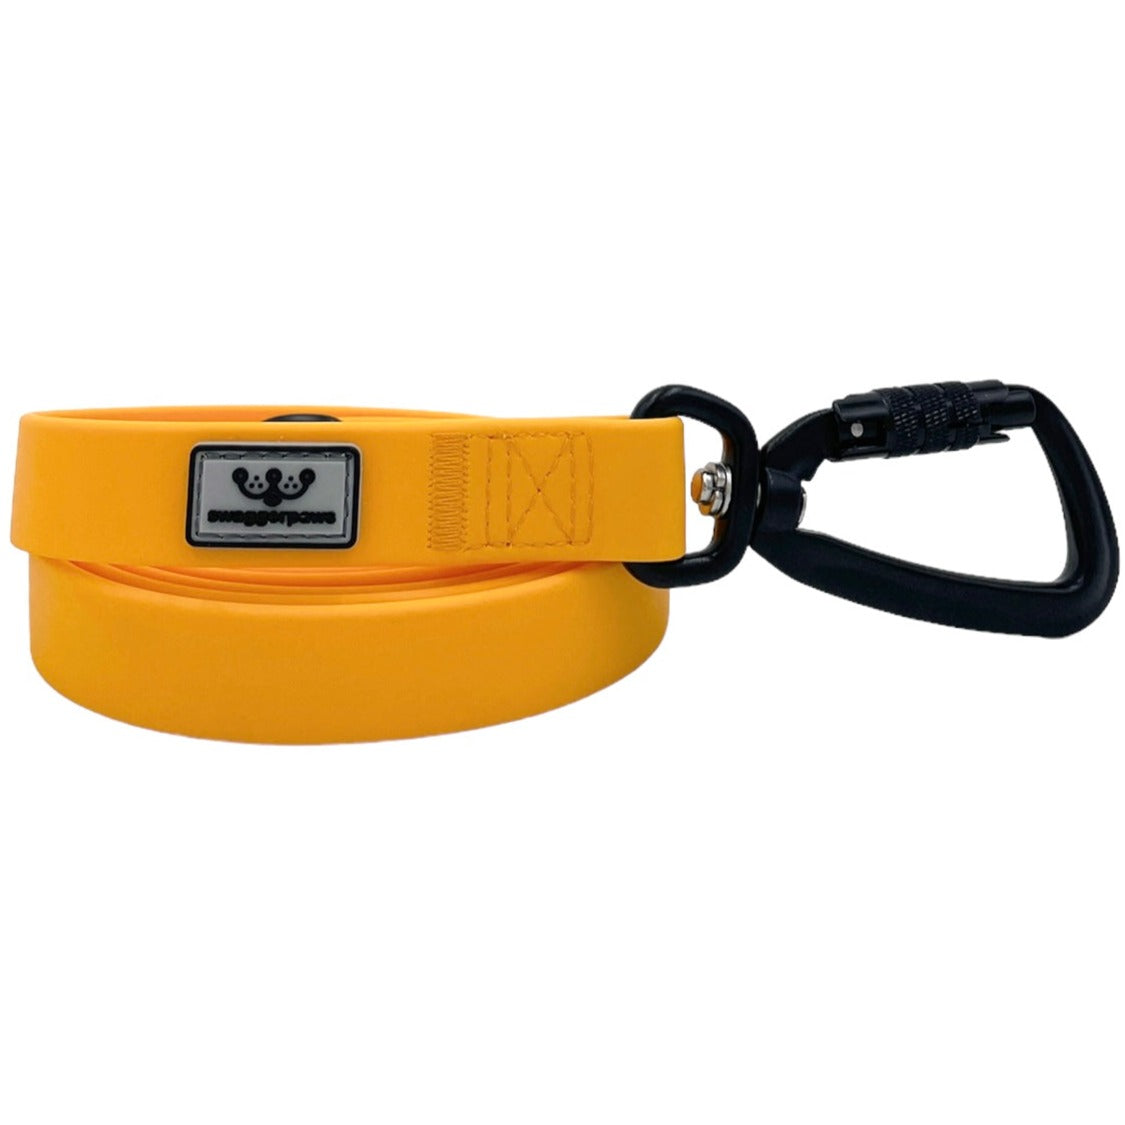 SwaggerPaws waterproof dog lead with auto-lock carabiner, mango orange